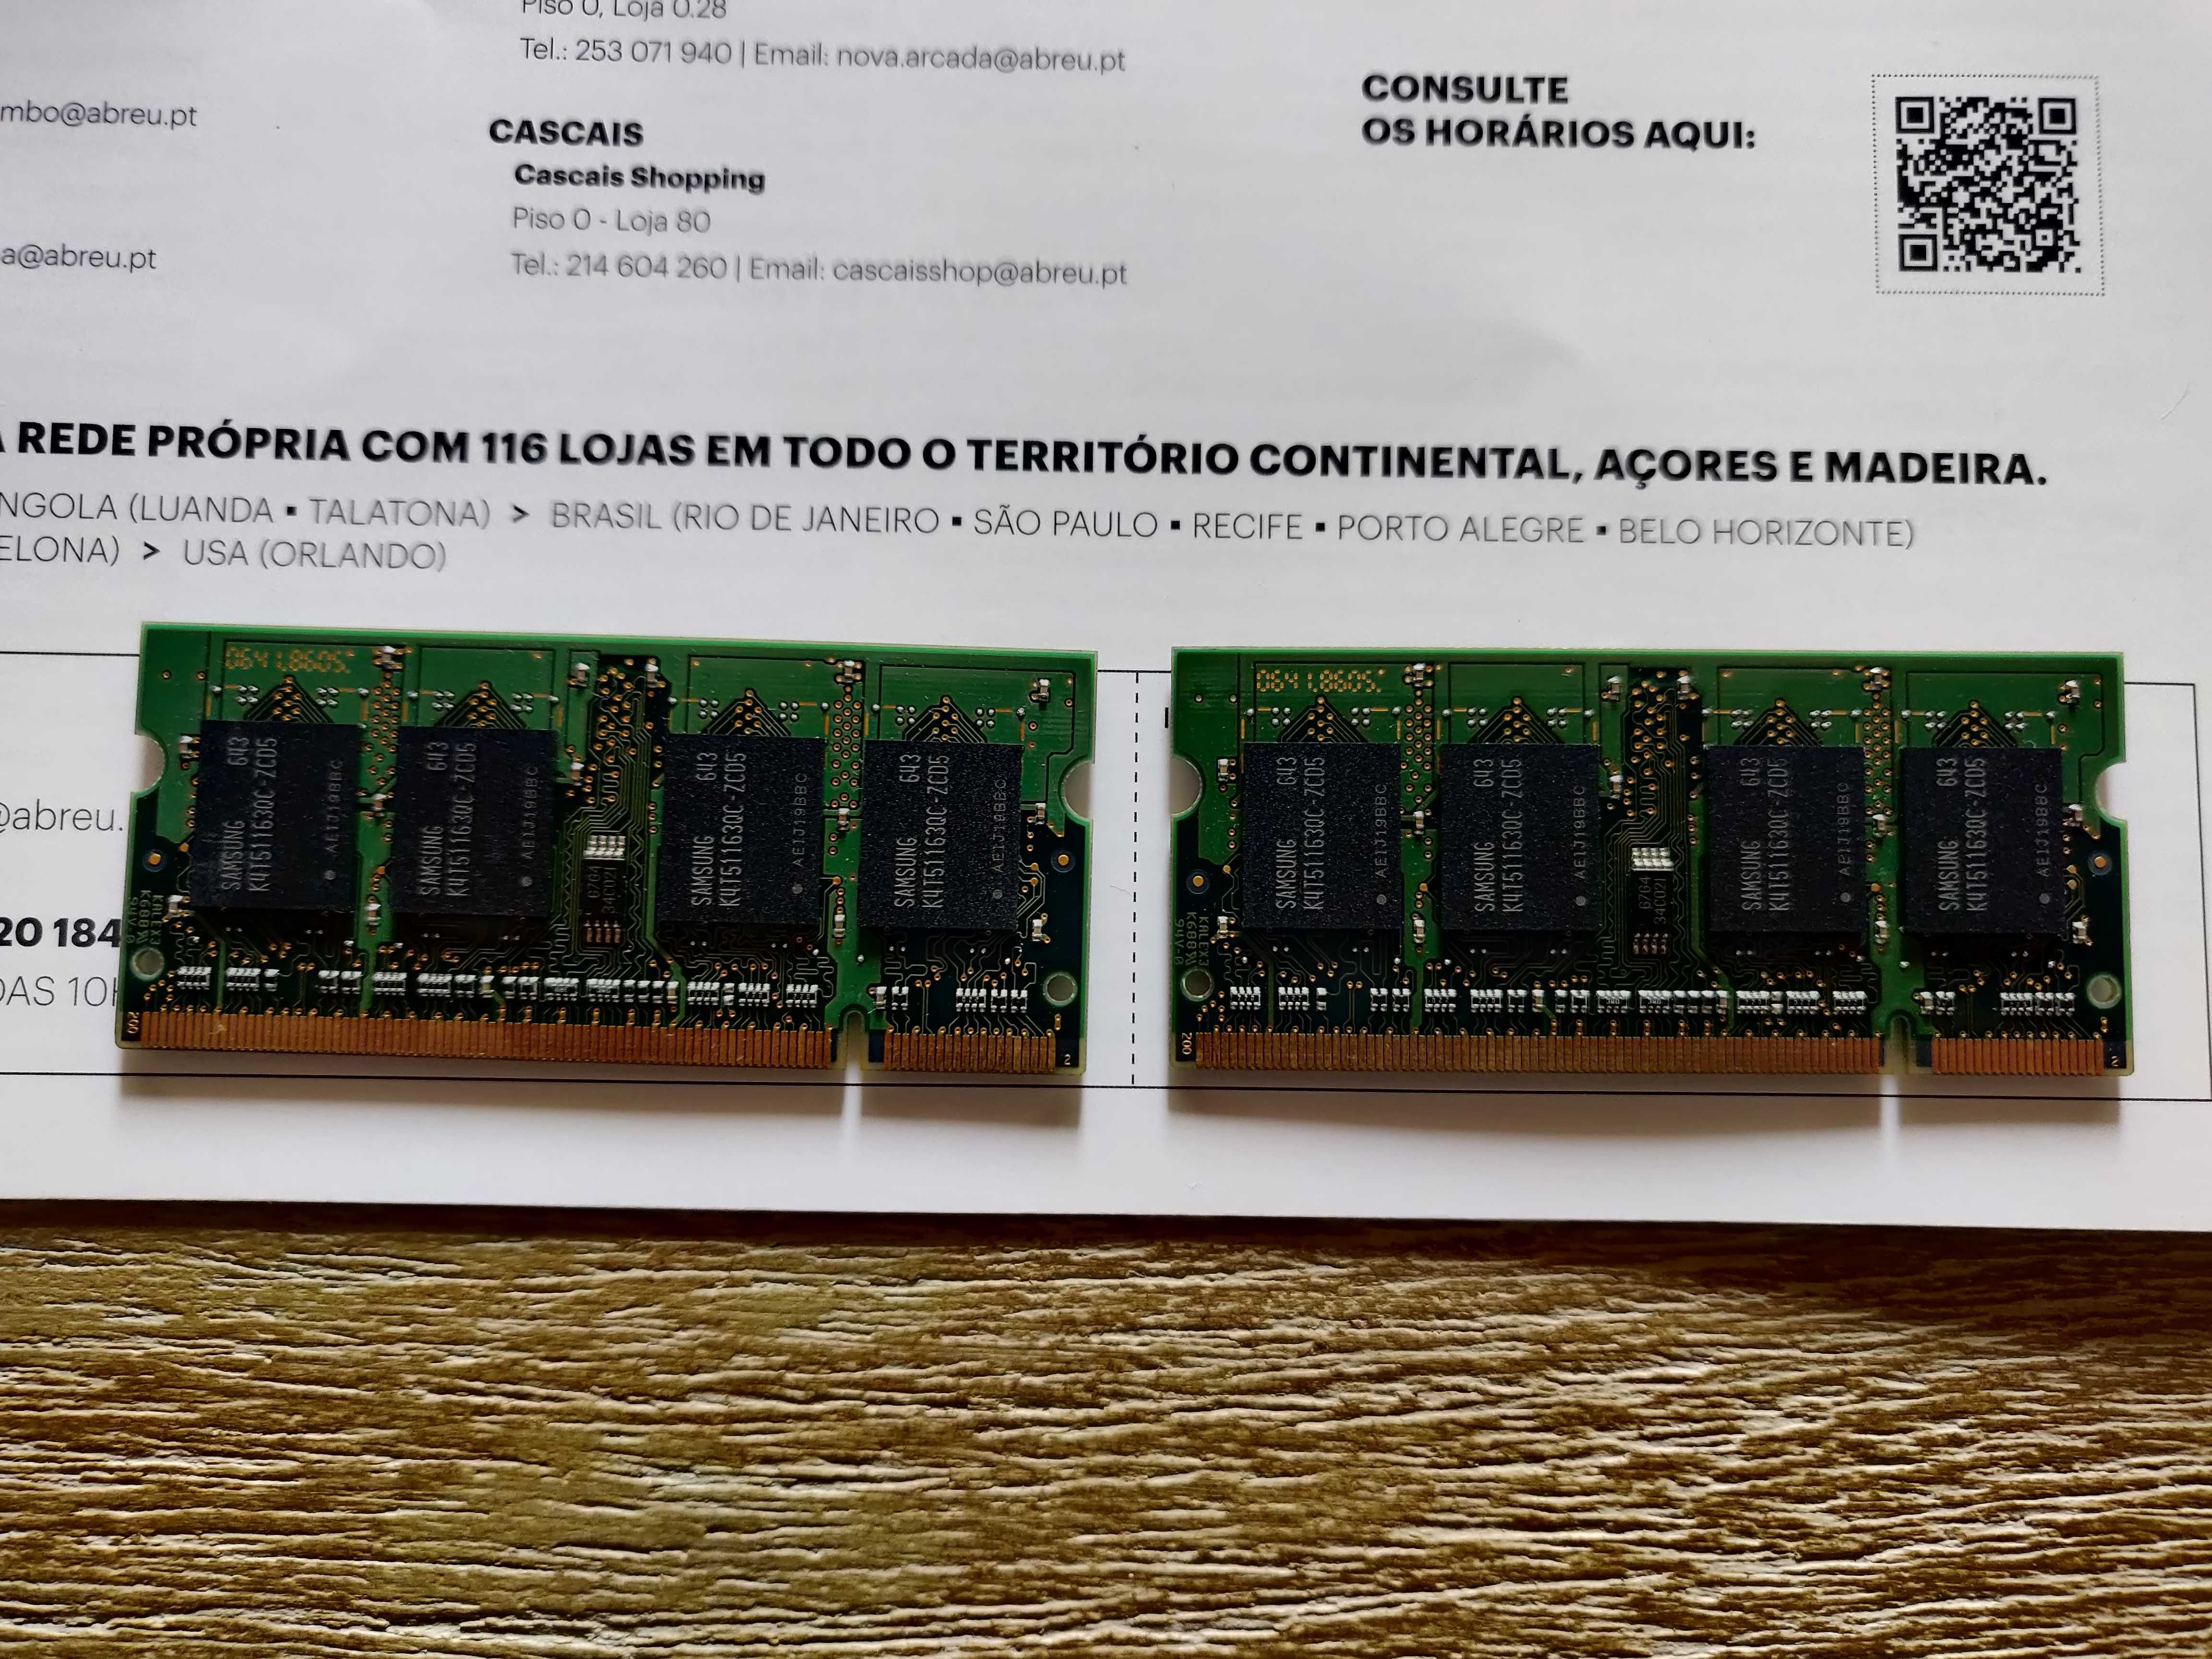 2 Memorias RAM Samsung 512MB 2Rx16 PC2 - 4200S - 444 - 12 - A3